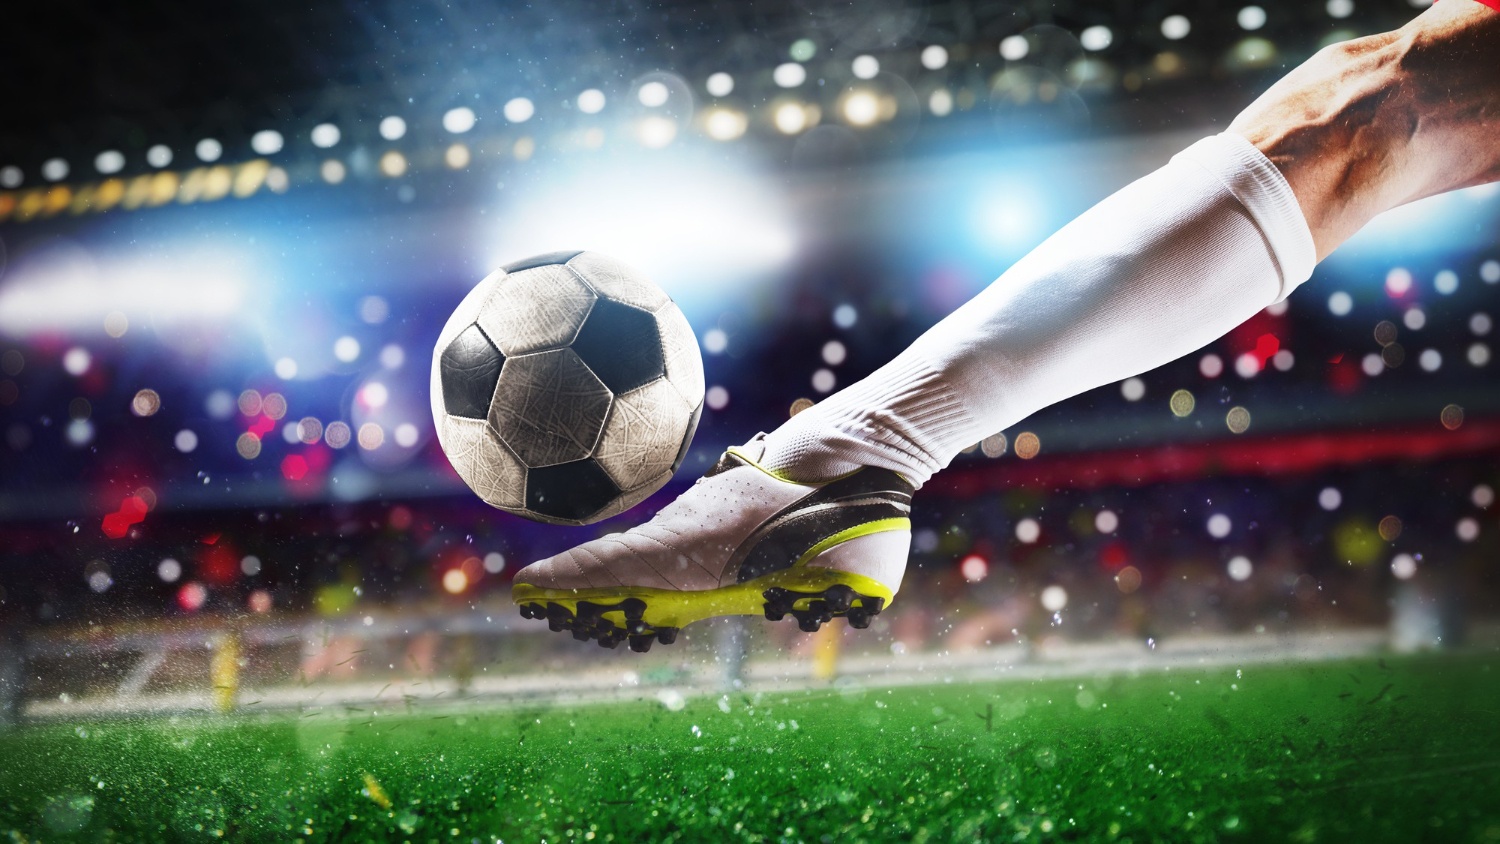 football-scene-night-match-with-close-up-soccer-shoe-hitting-bal